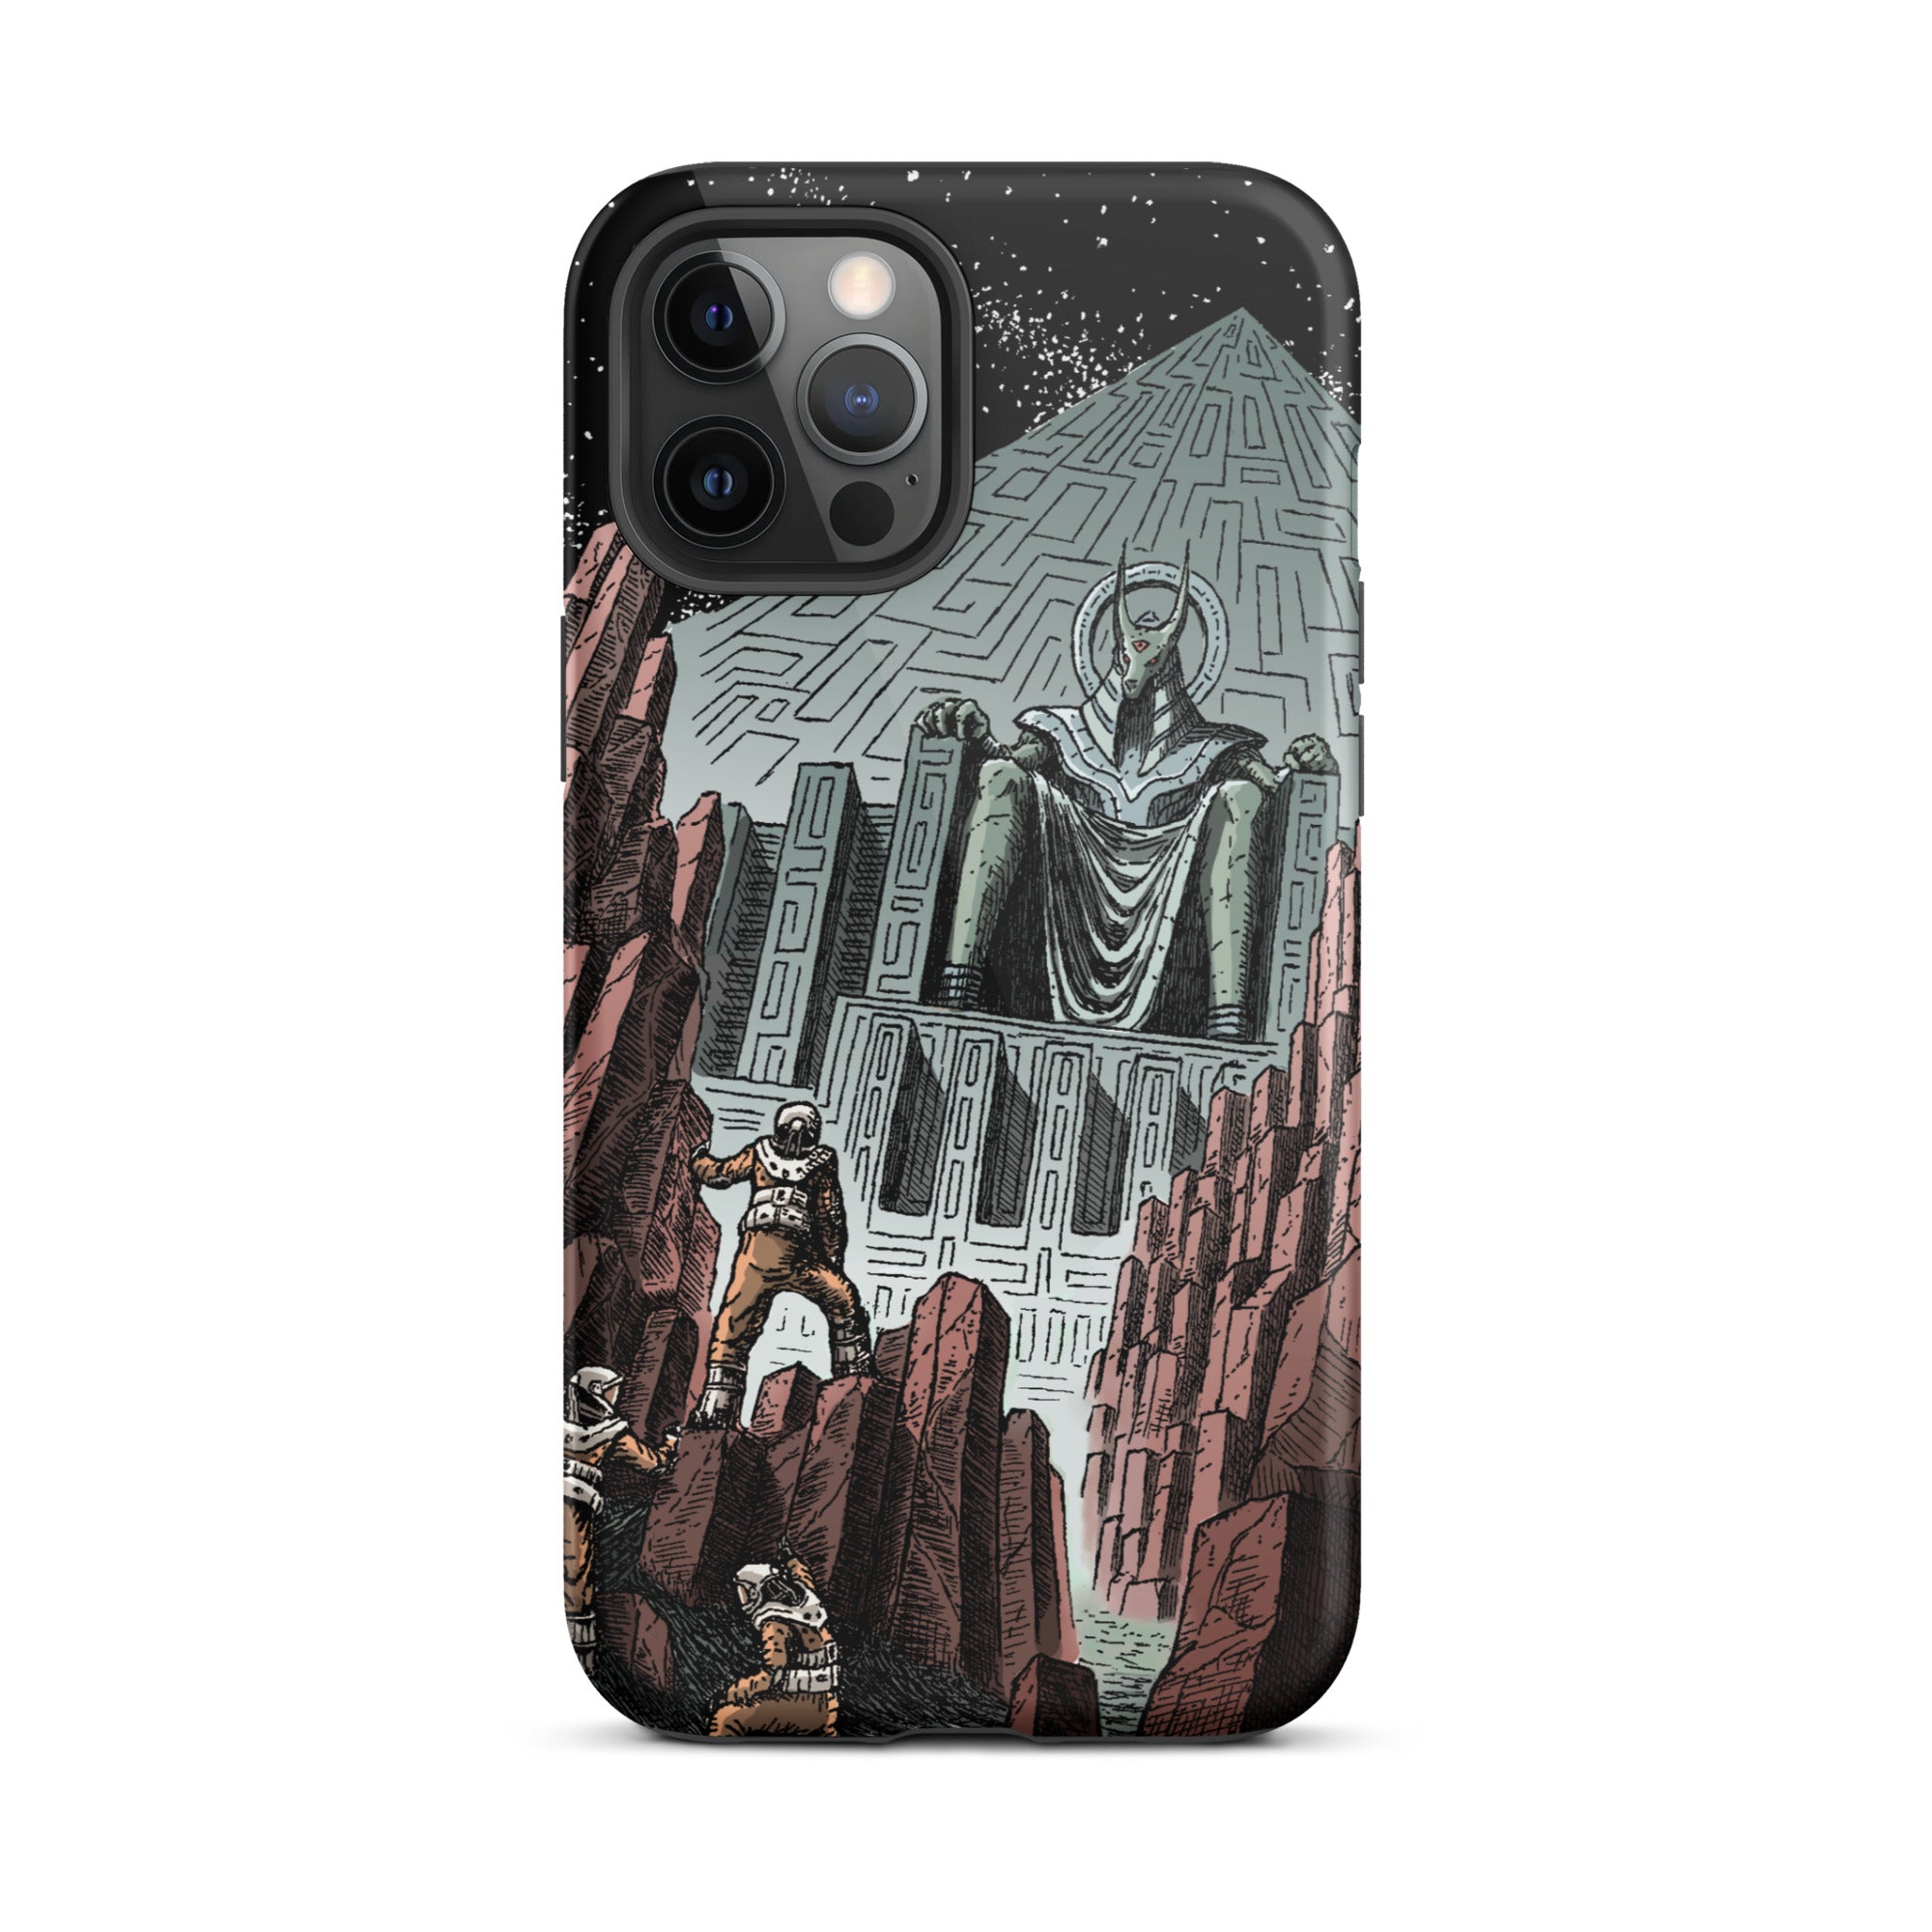 Tough iPhone Case - The Ancient God